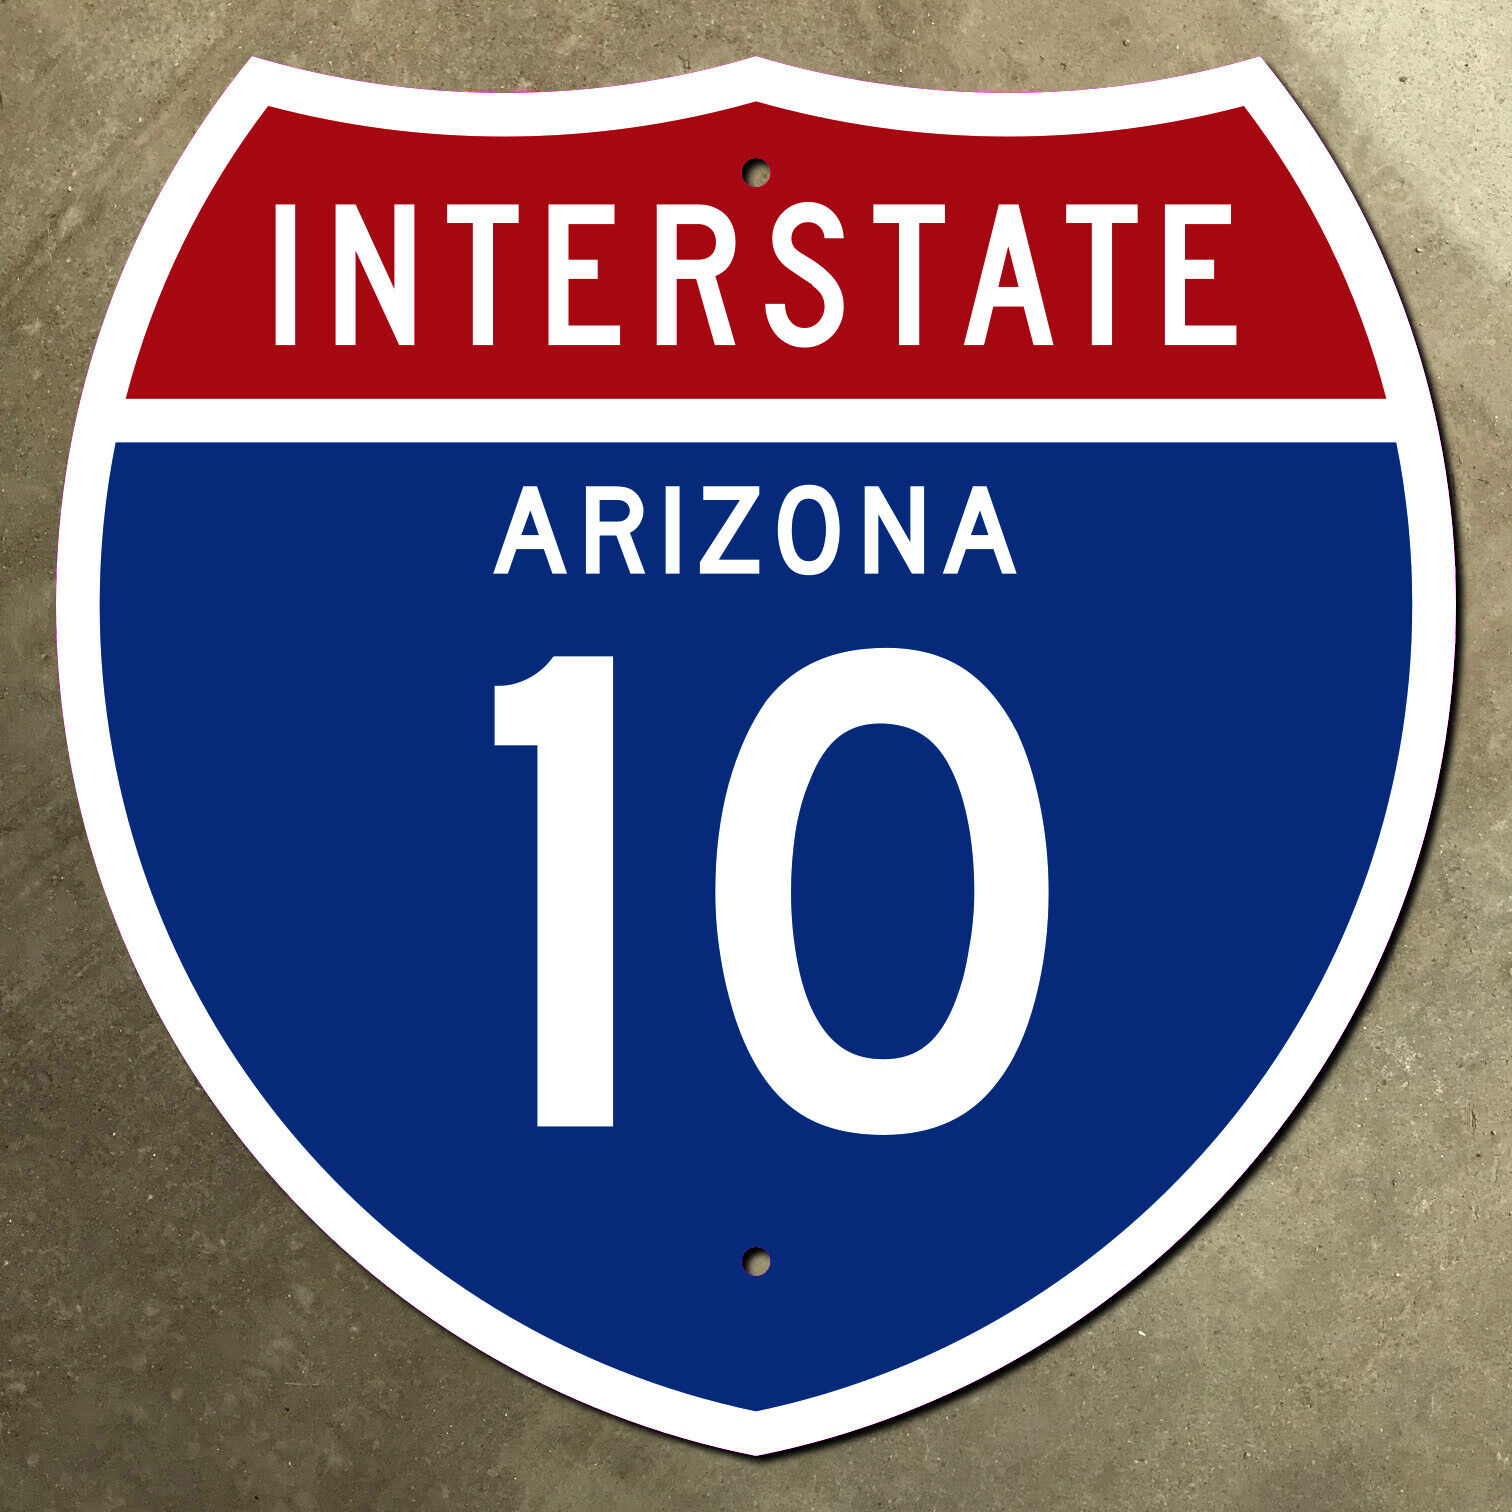 Arizona interstate route 10 Phoenix Tucson highway marker 1957 road sign 18x18